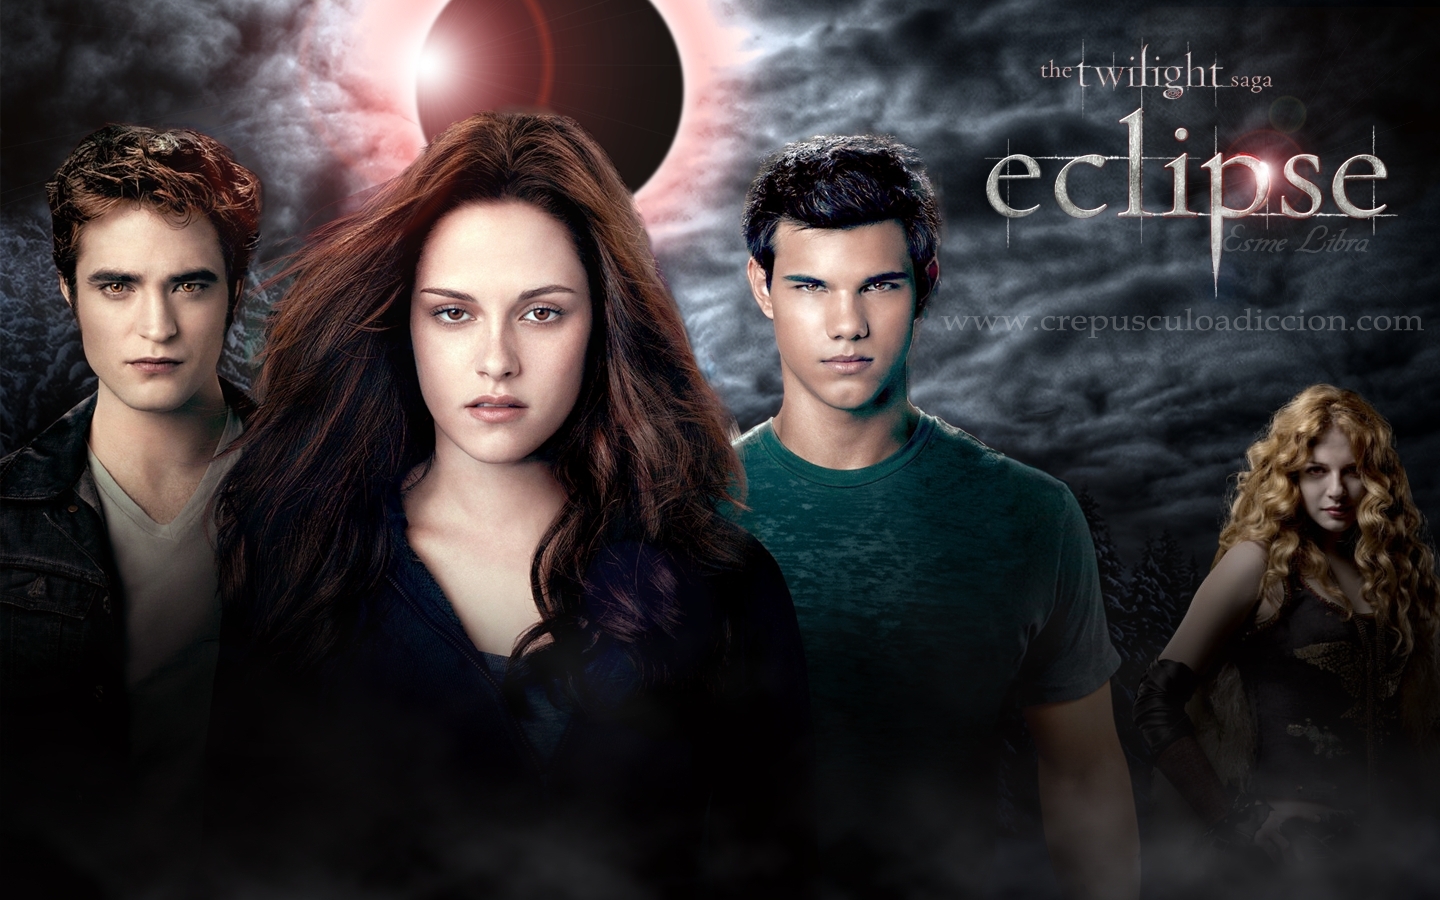 Twilight Series Image Eclipse Wallpaper Photos